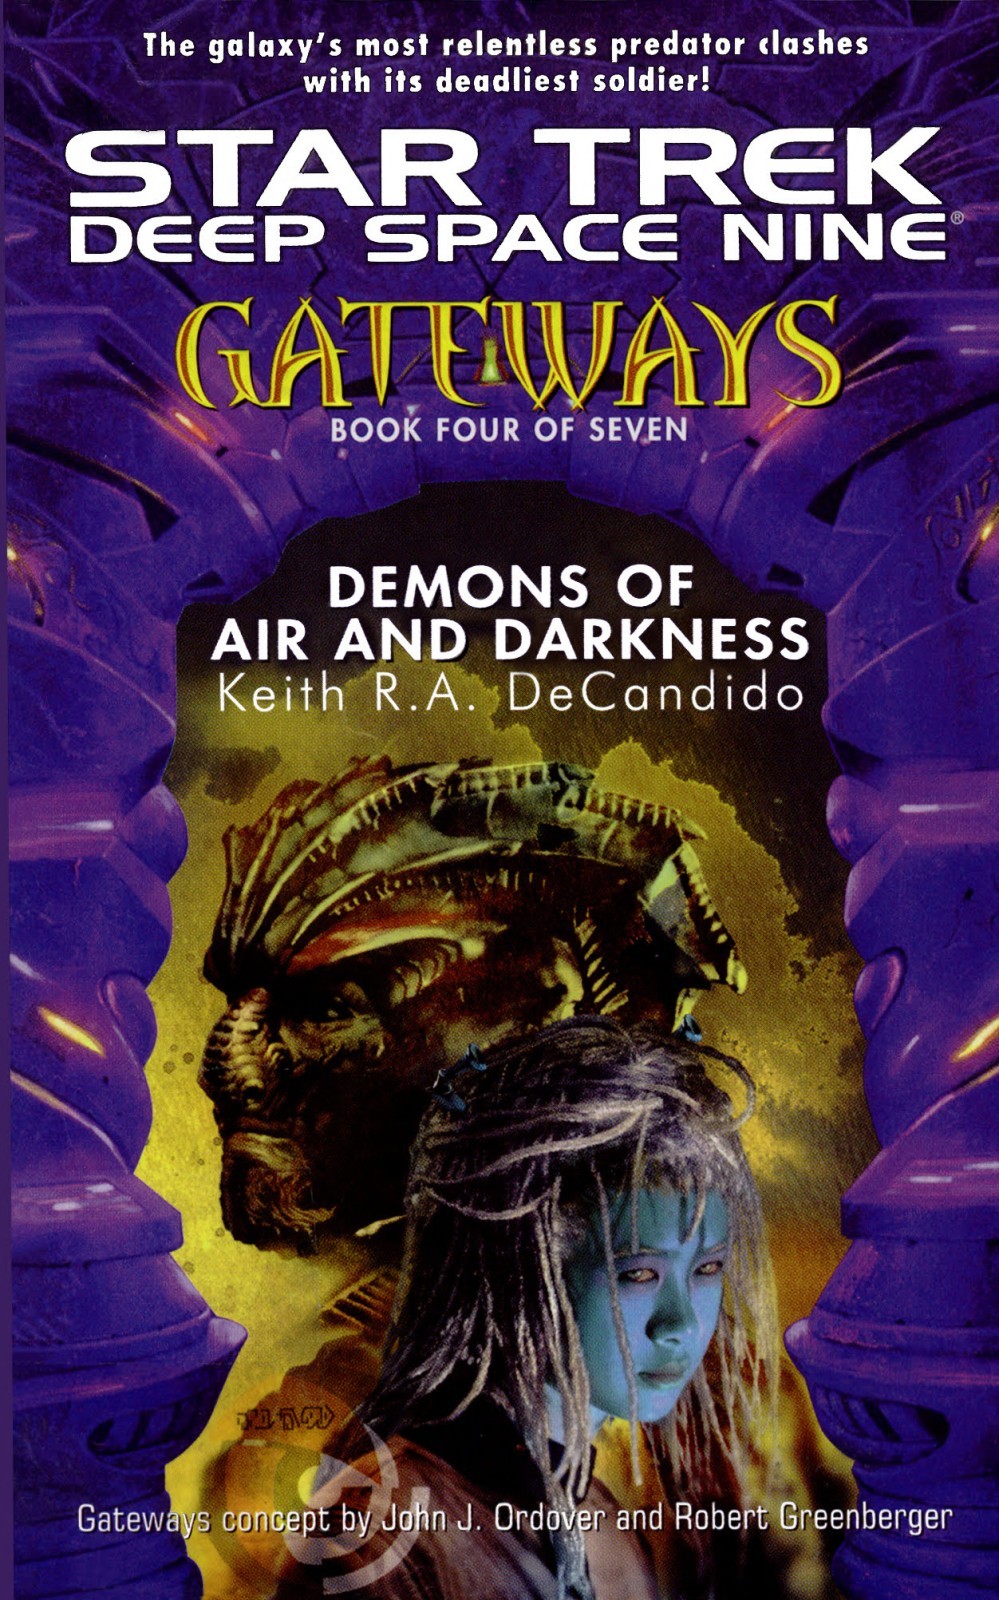 Star Trek Gateways: Demons of Air and Darkness